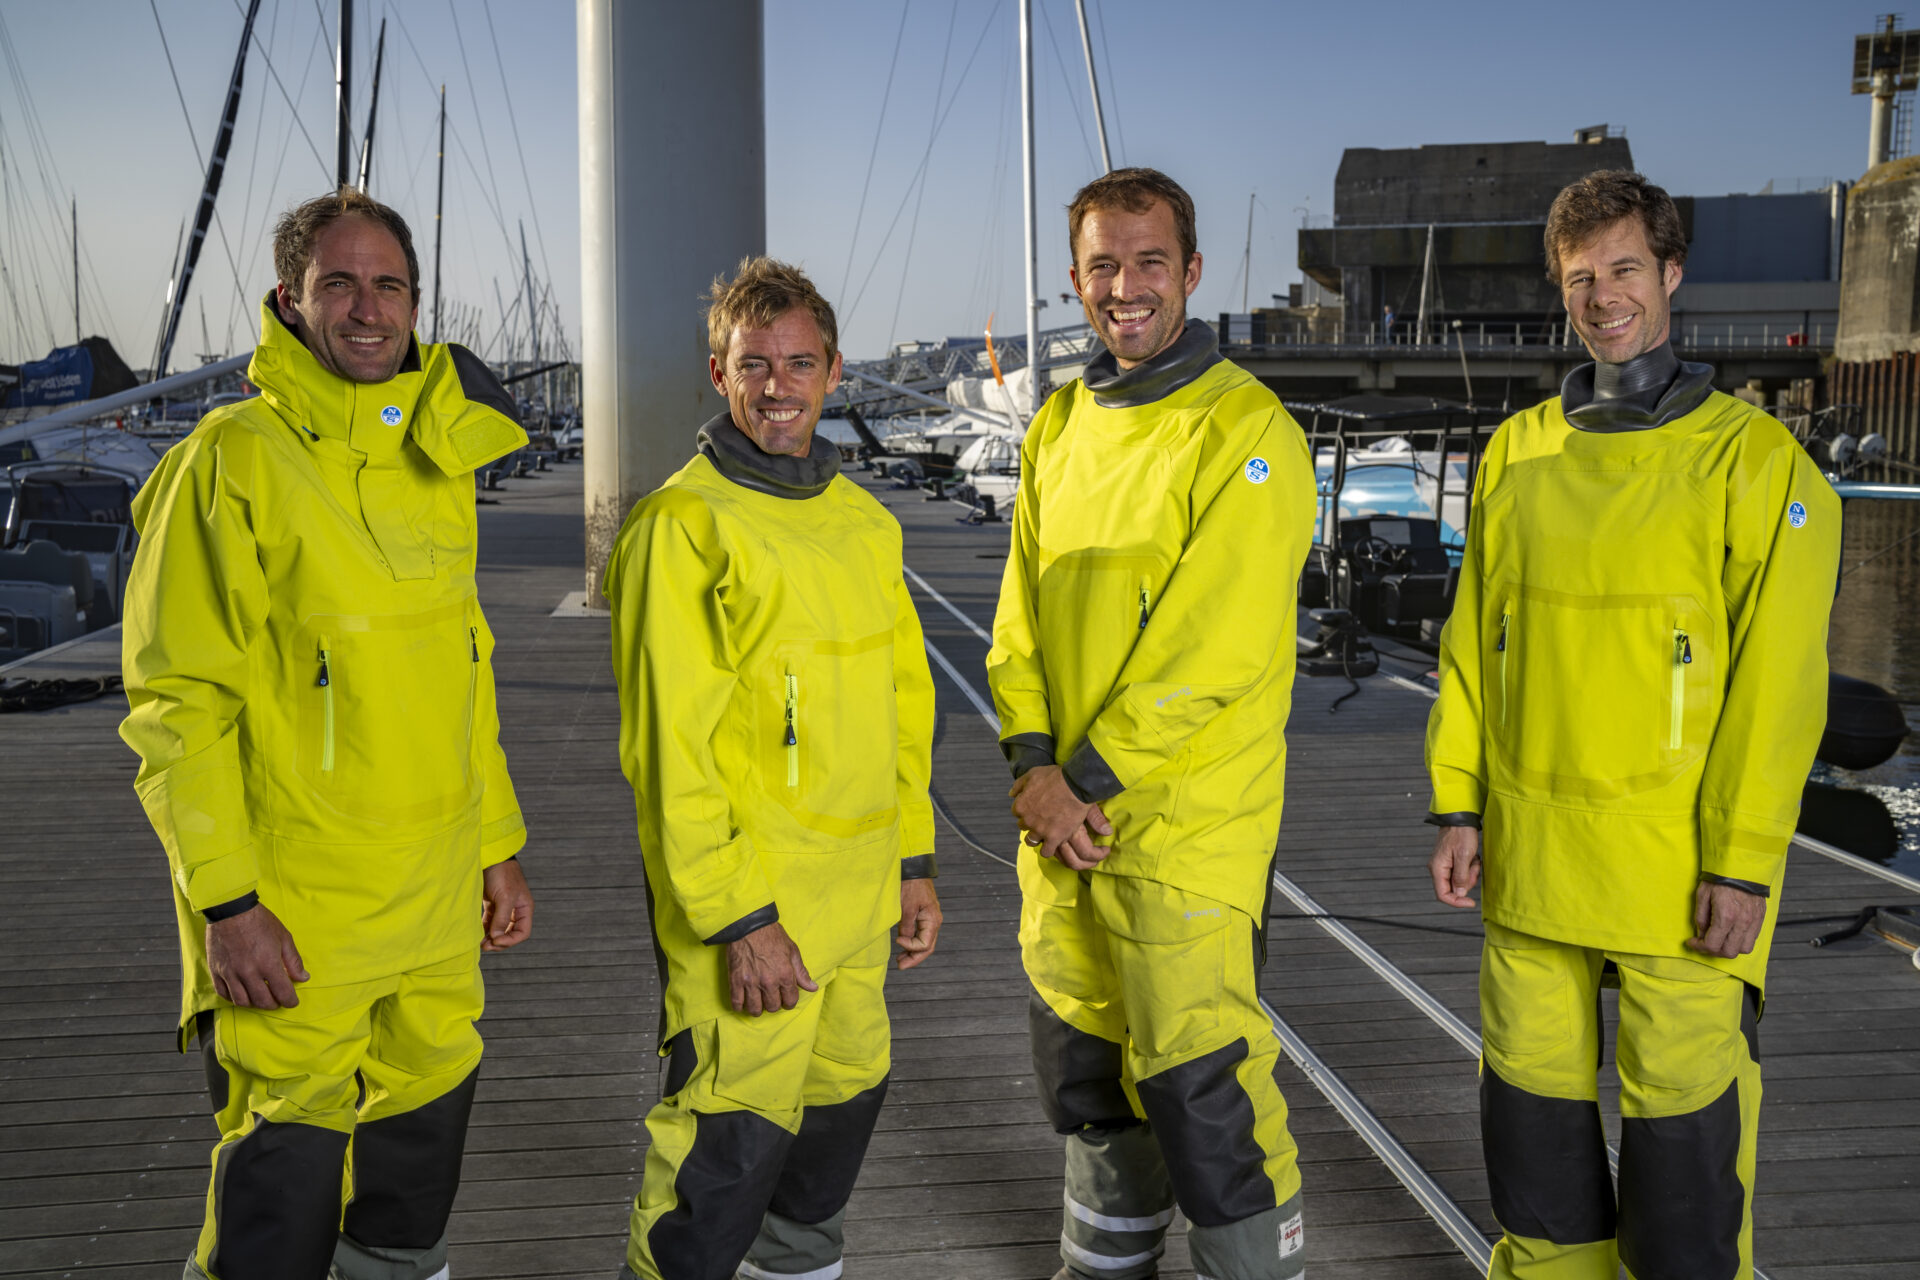 Leyton Sailing Team